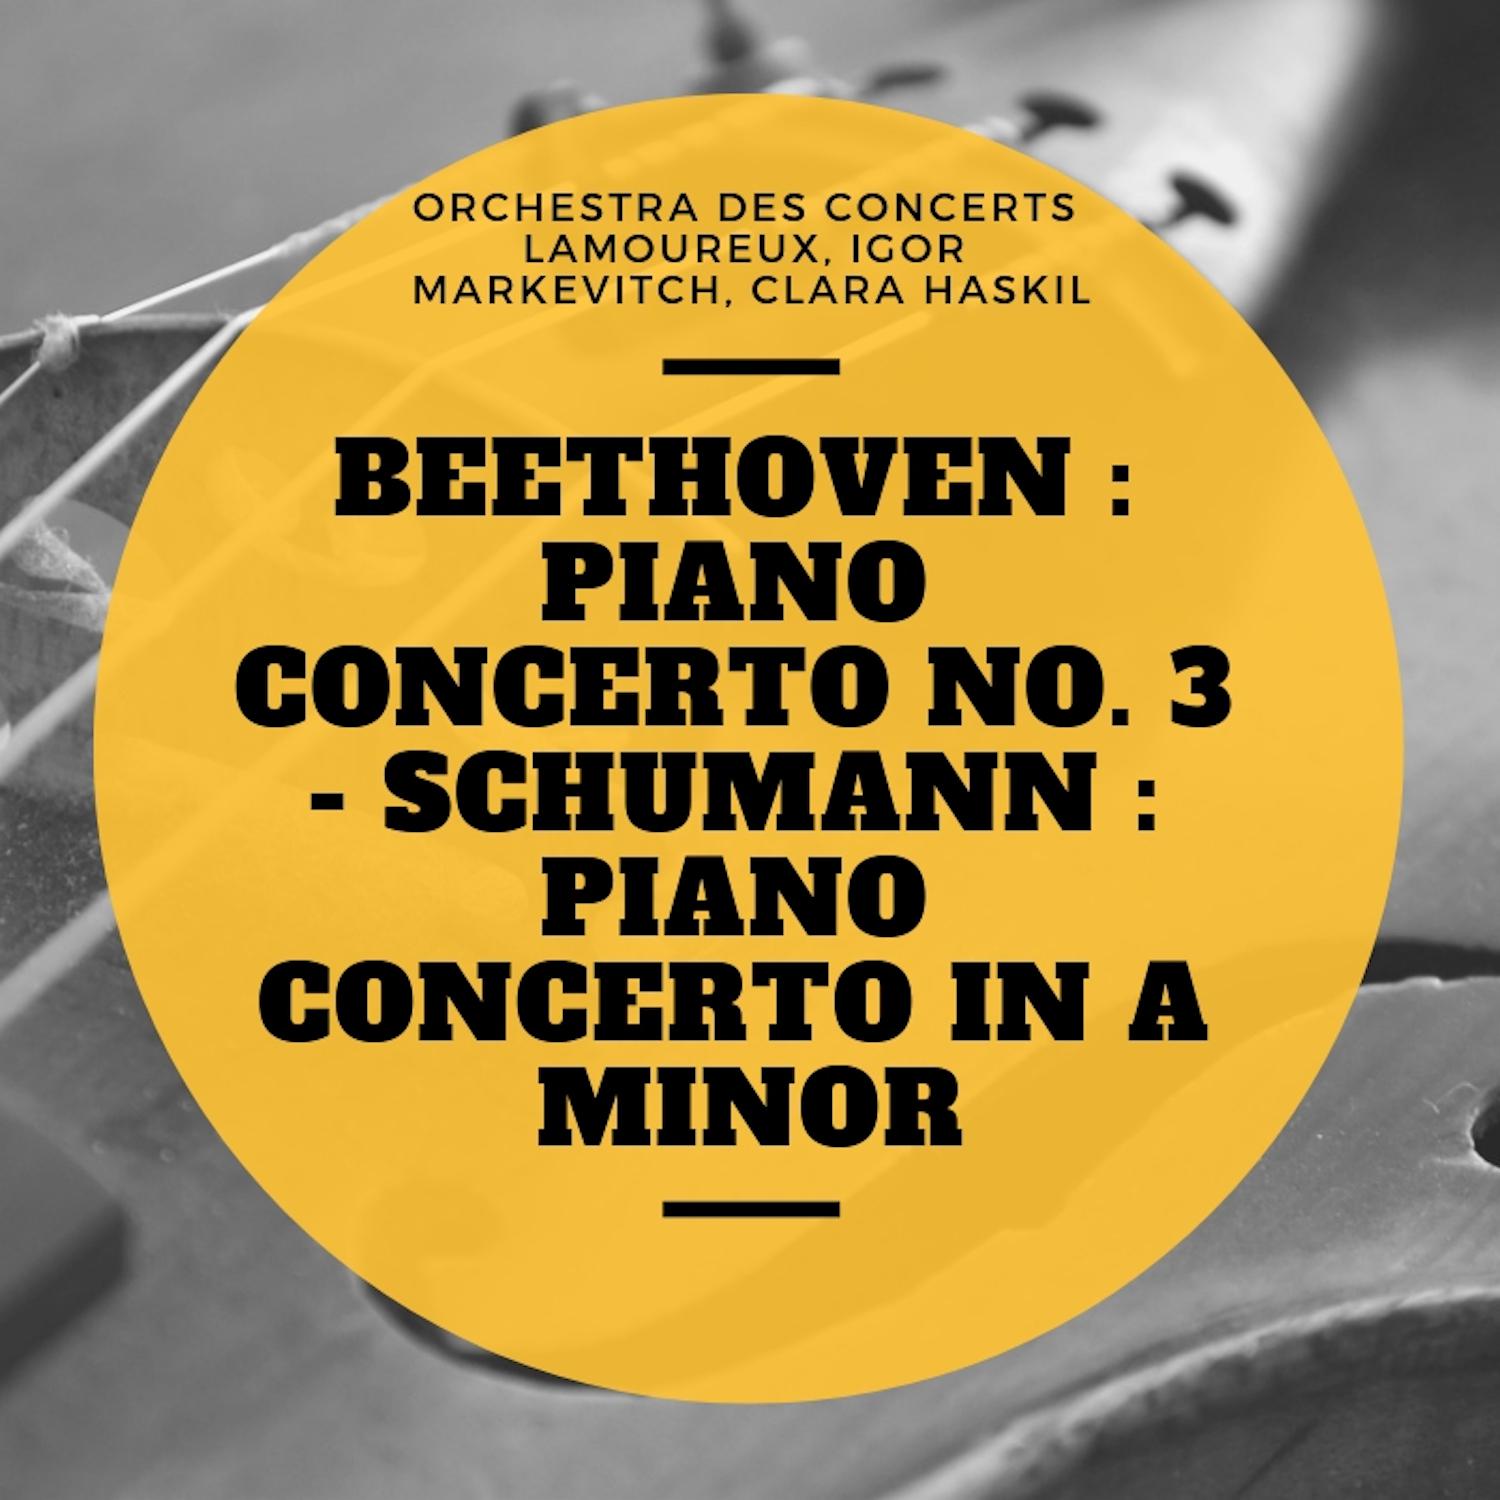 Beethoven : Piano Concerto No. 3 - Schumann : Piano Concerto In A Minor